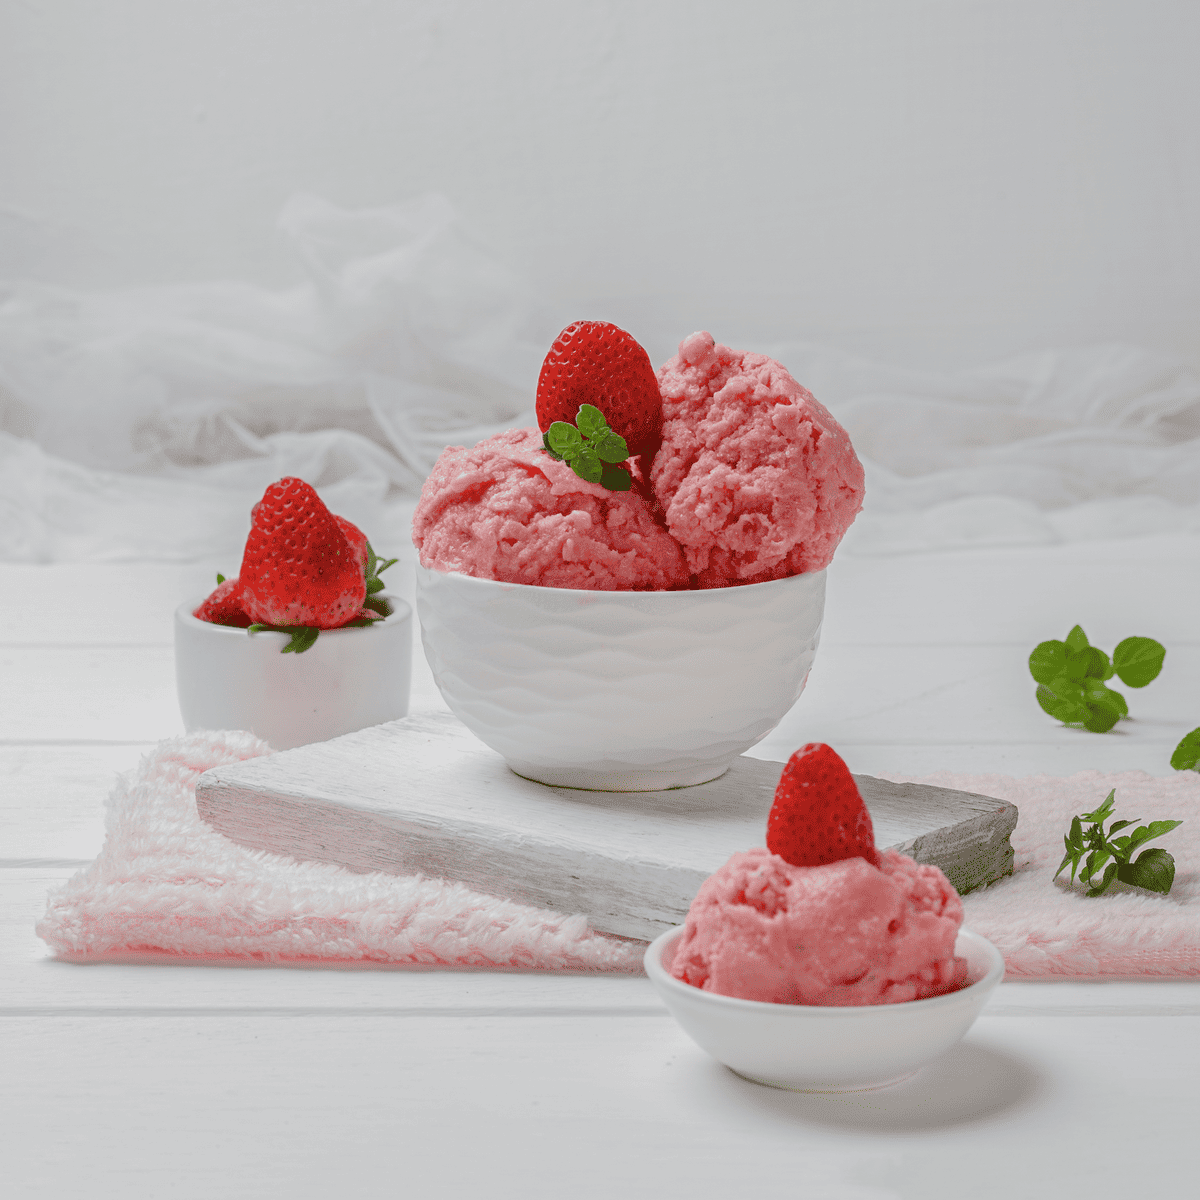 Strawberry Yogurt Ice Cream served